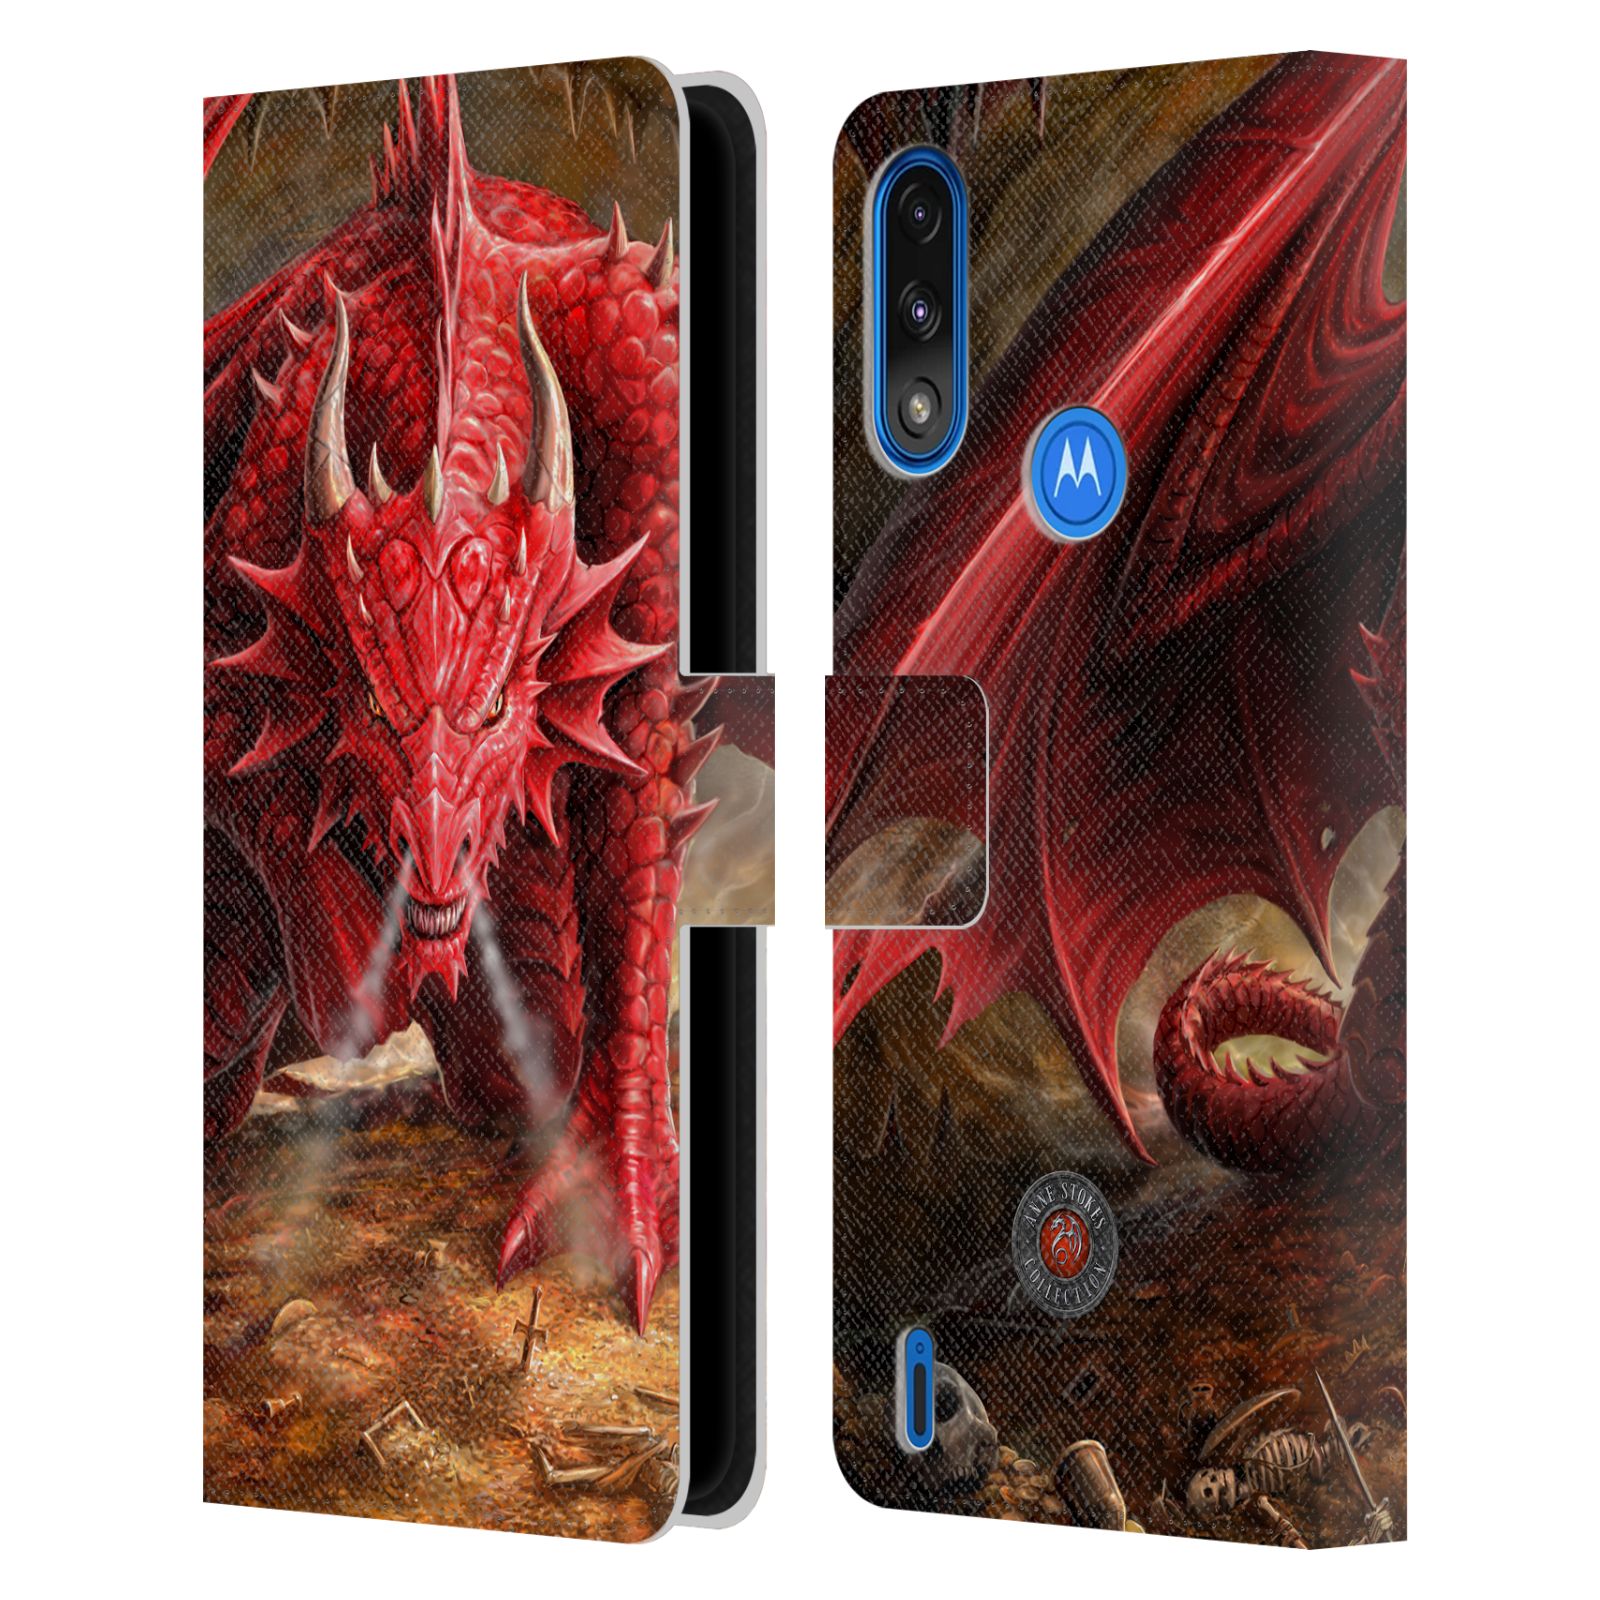 Pouzdro HEAD CASE na mobil Motorola Moto E7 POWER  fantasy - červený drak